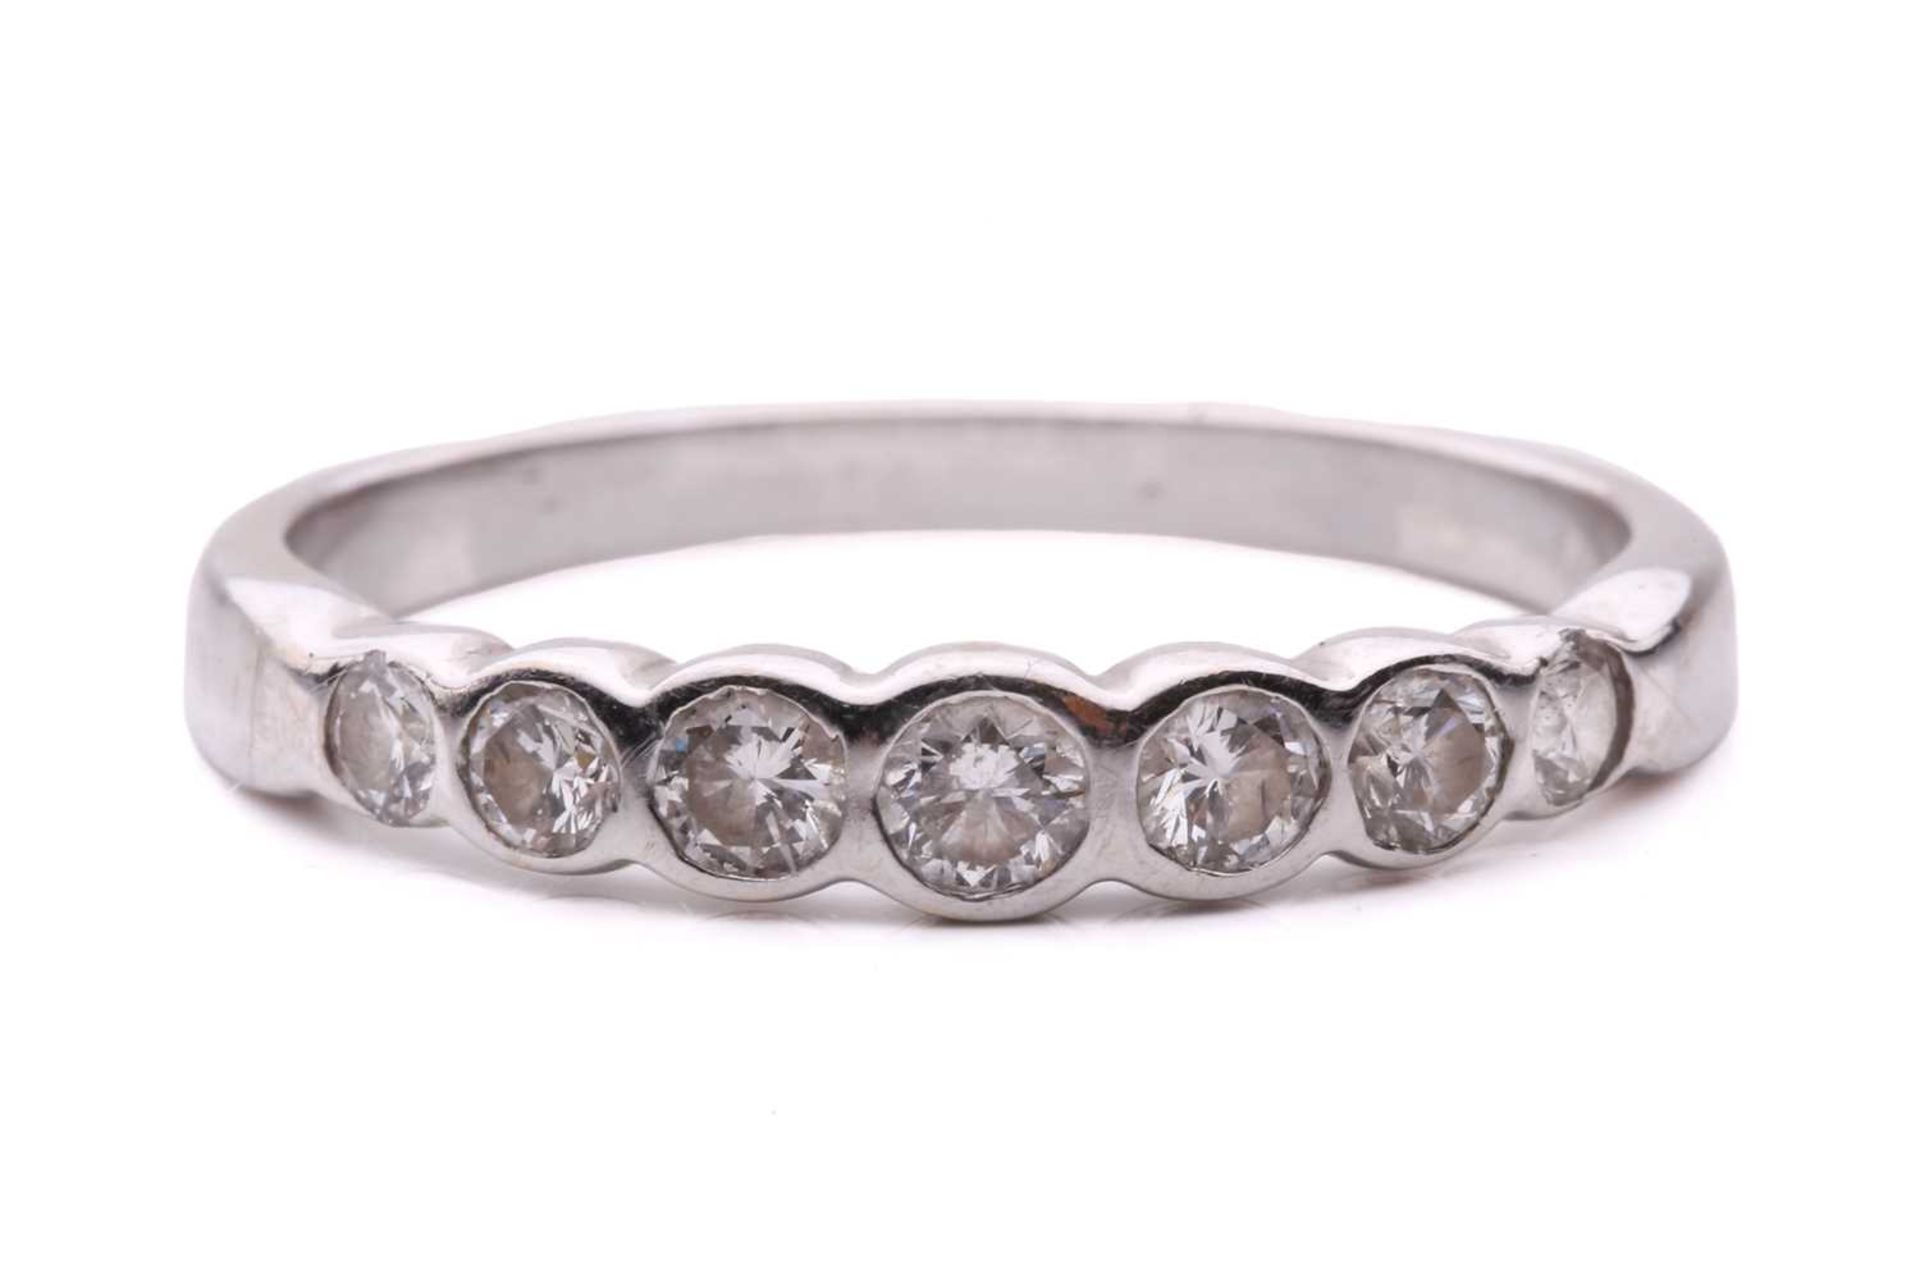 A diamond seven stone half hoop eternity ring, featuring a row of round brilliant cut diamonds